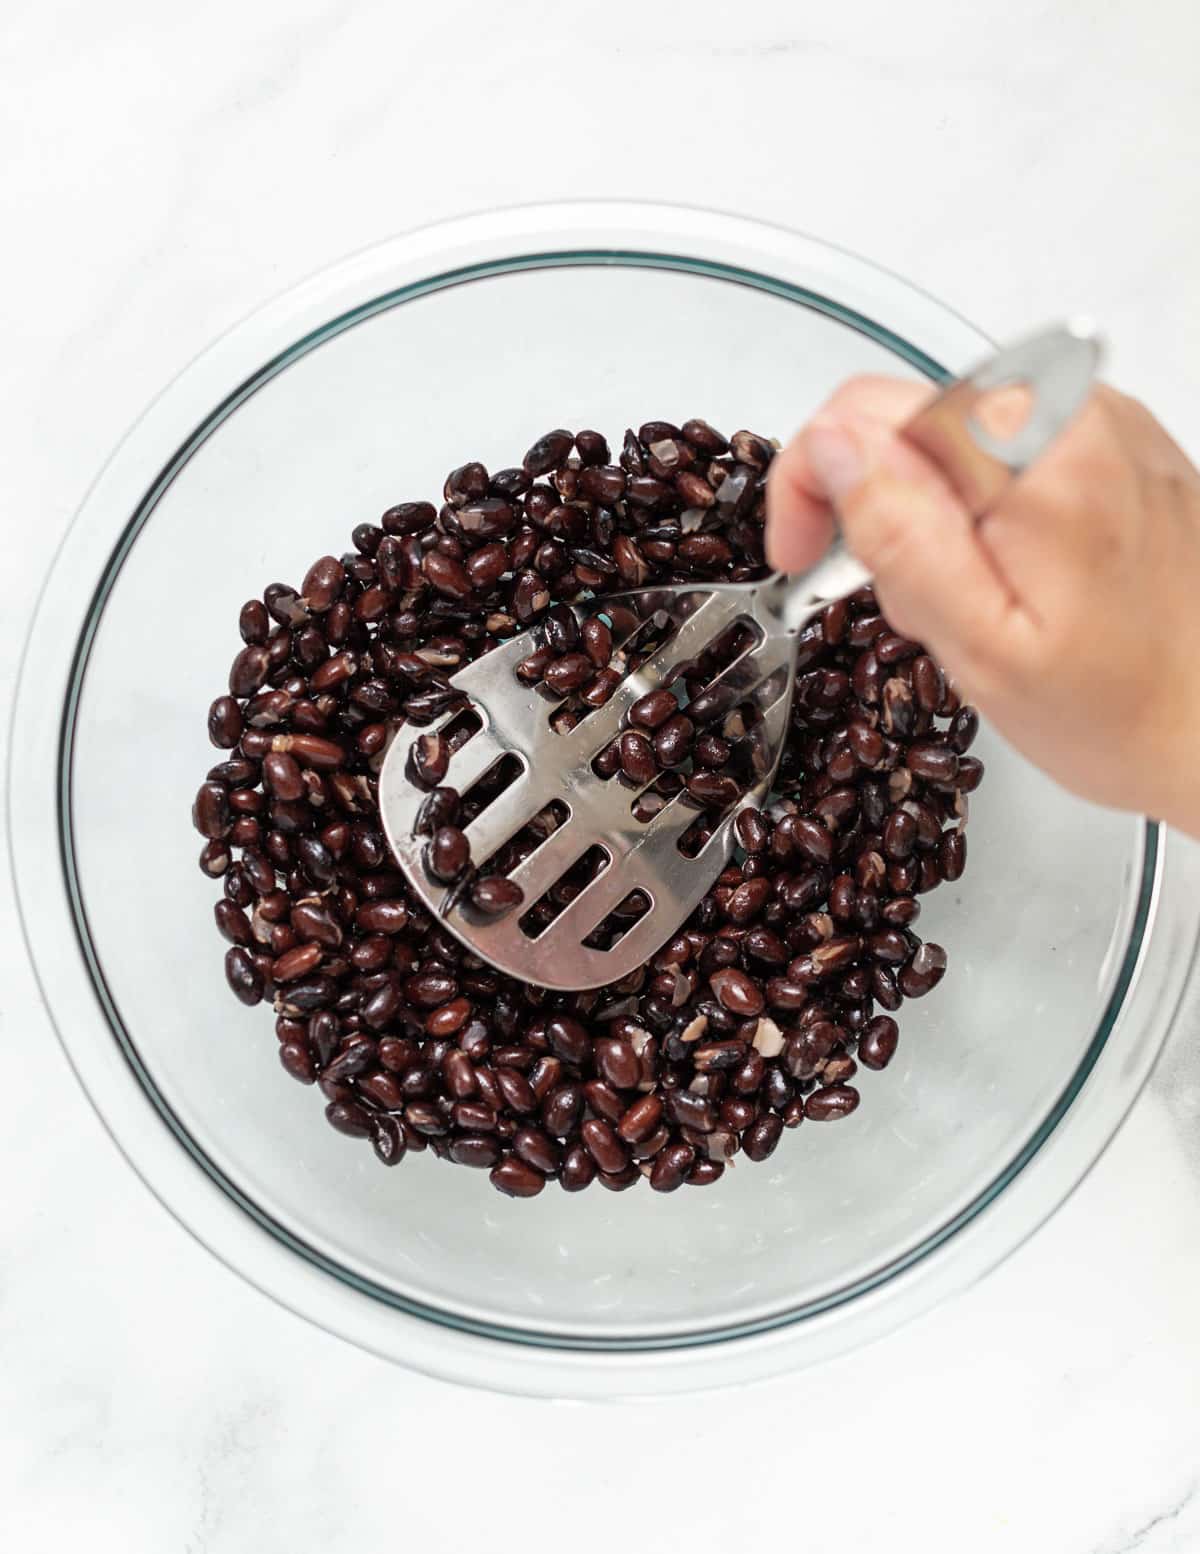 mashing black beans with a potato masher